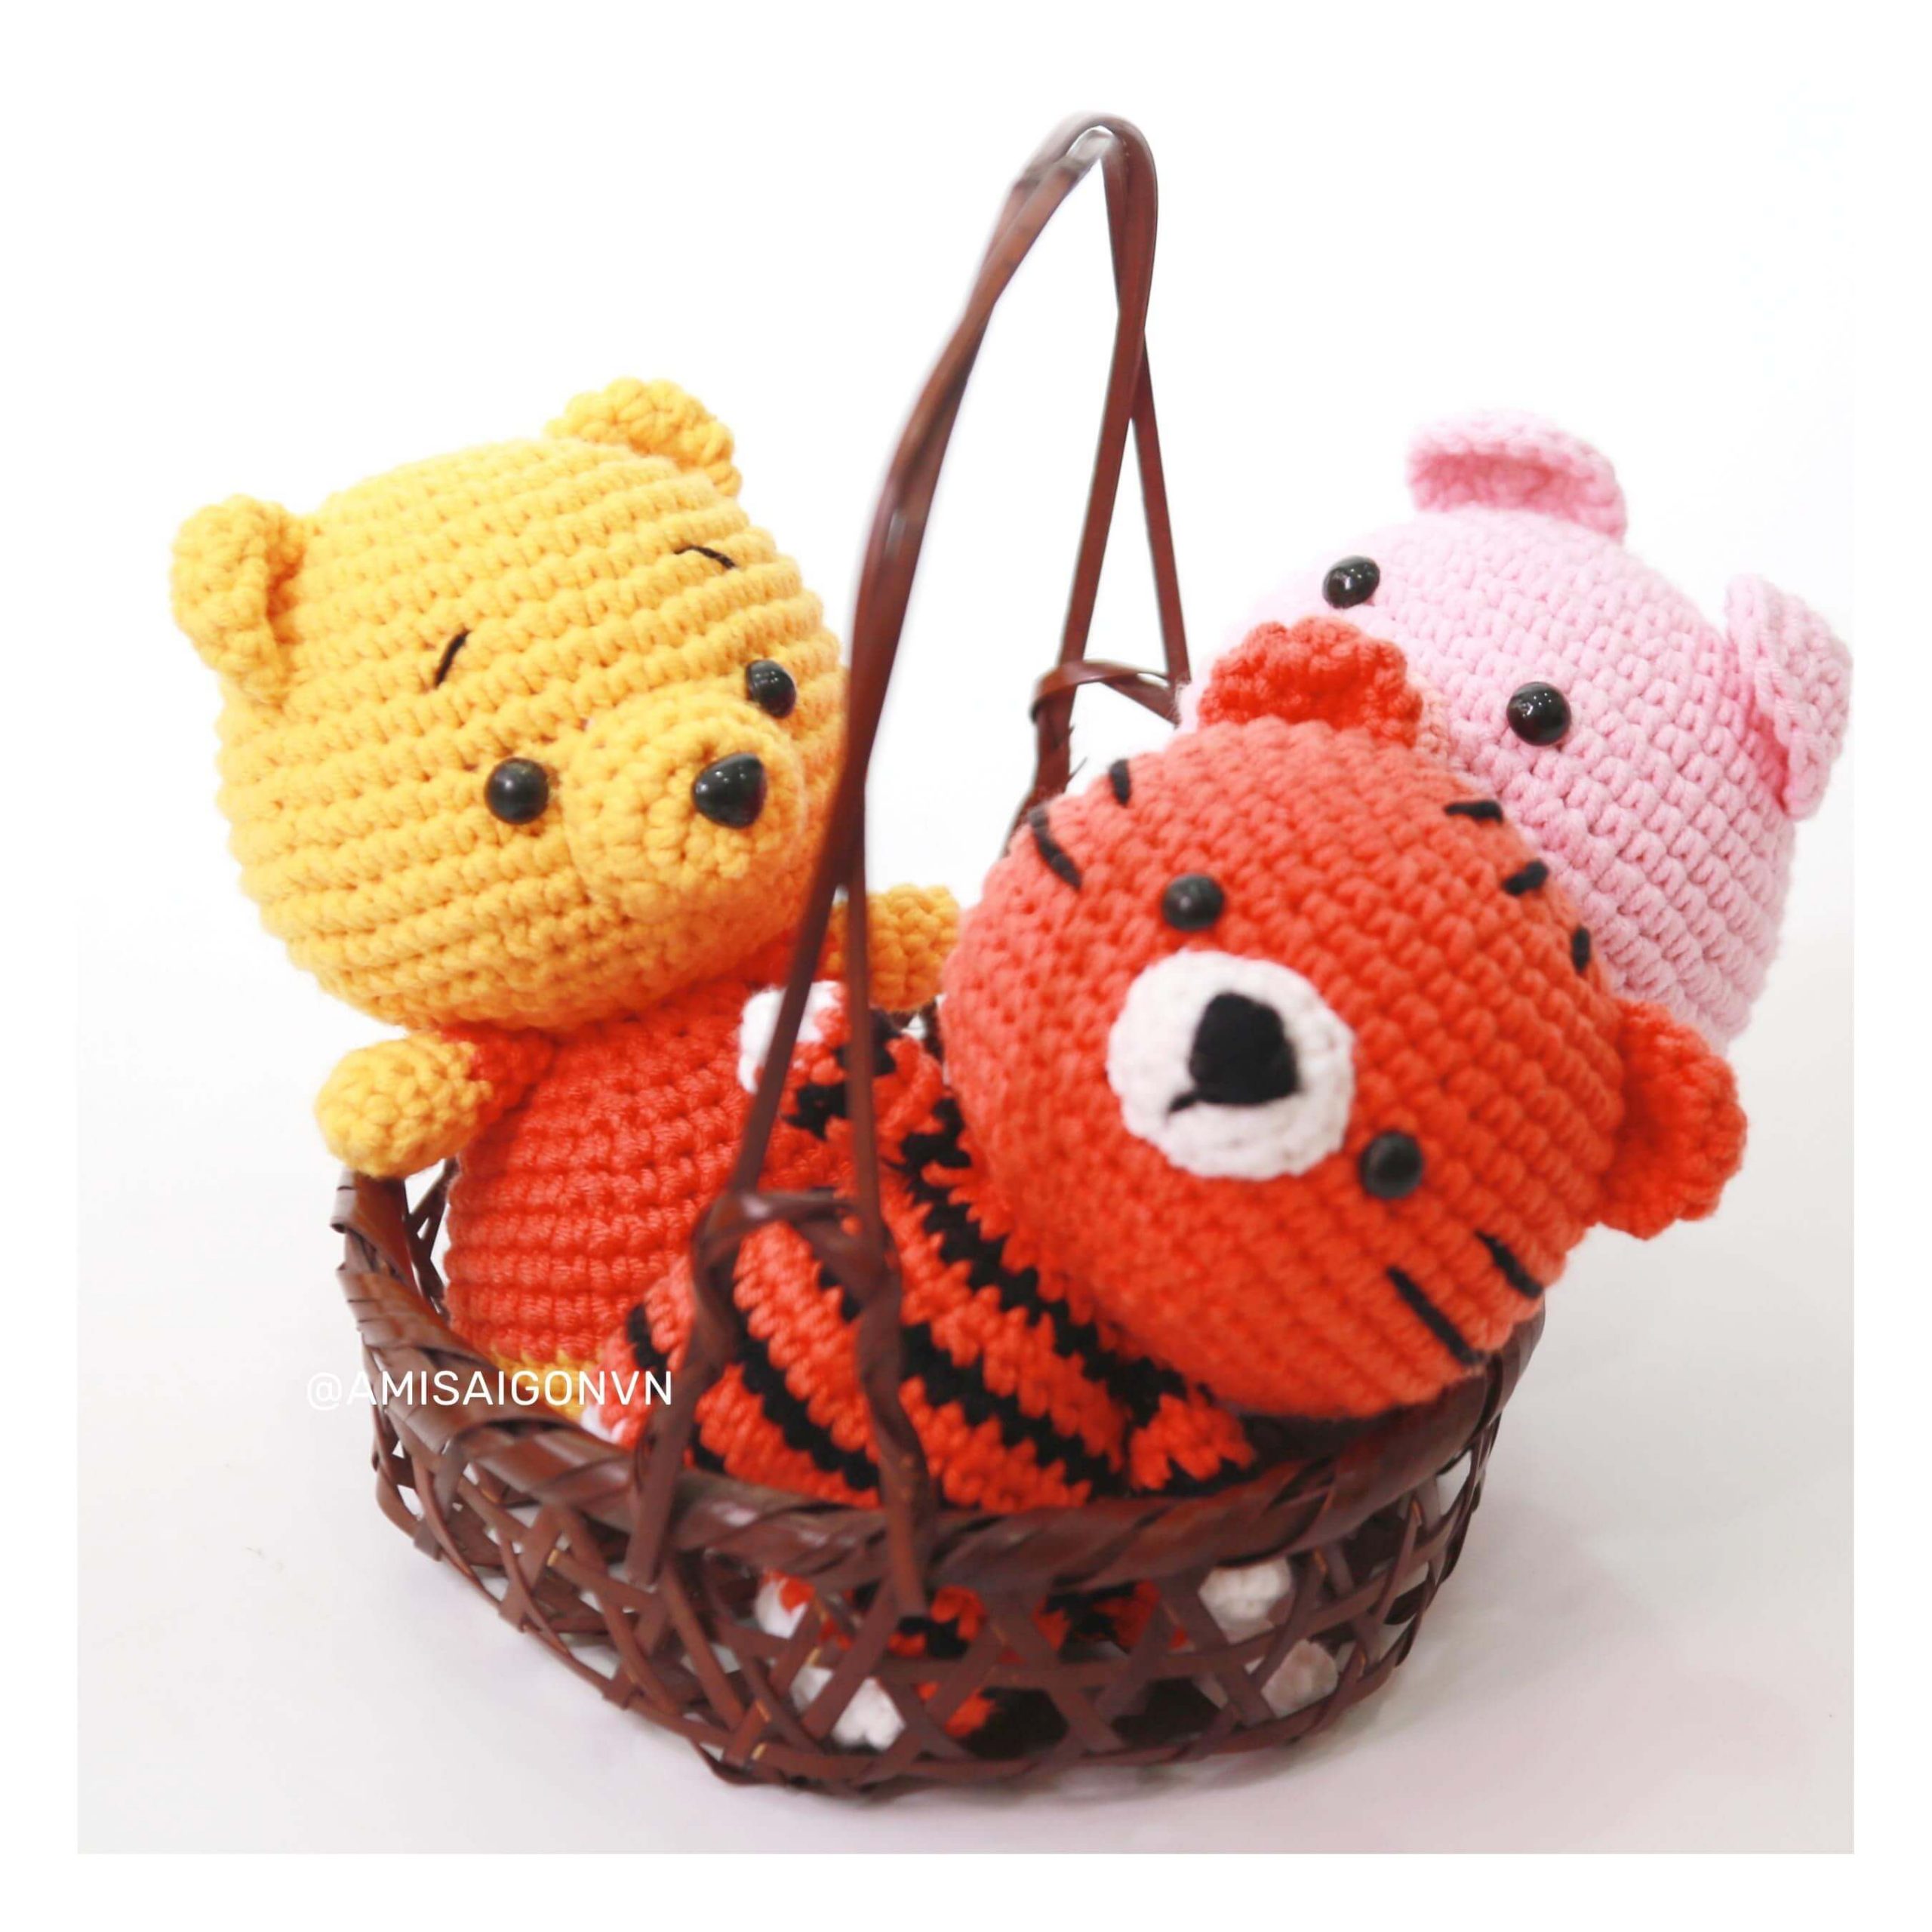 tiger-crochet-pattern-amigurumi-by-amisaigon (4)